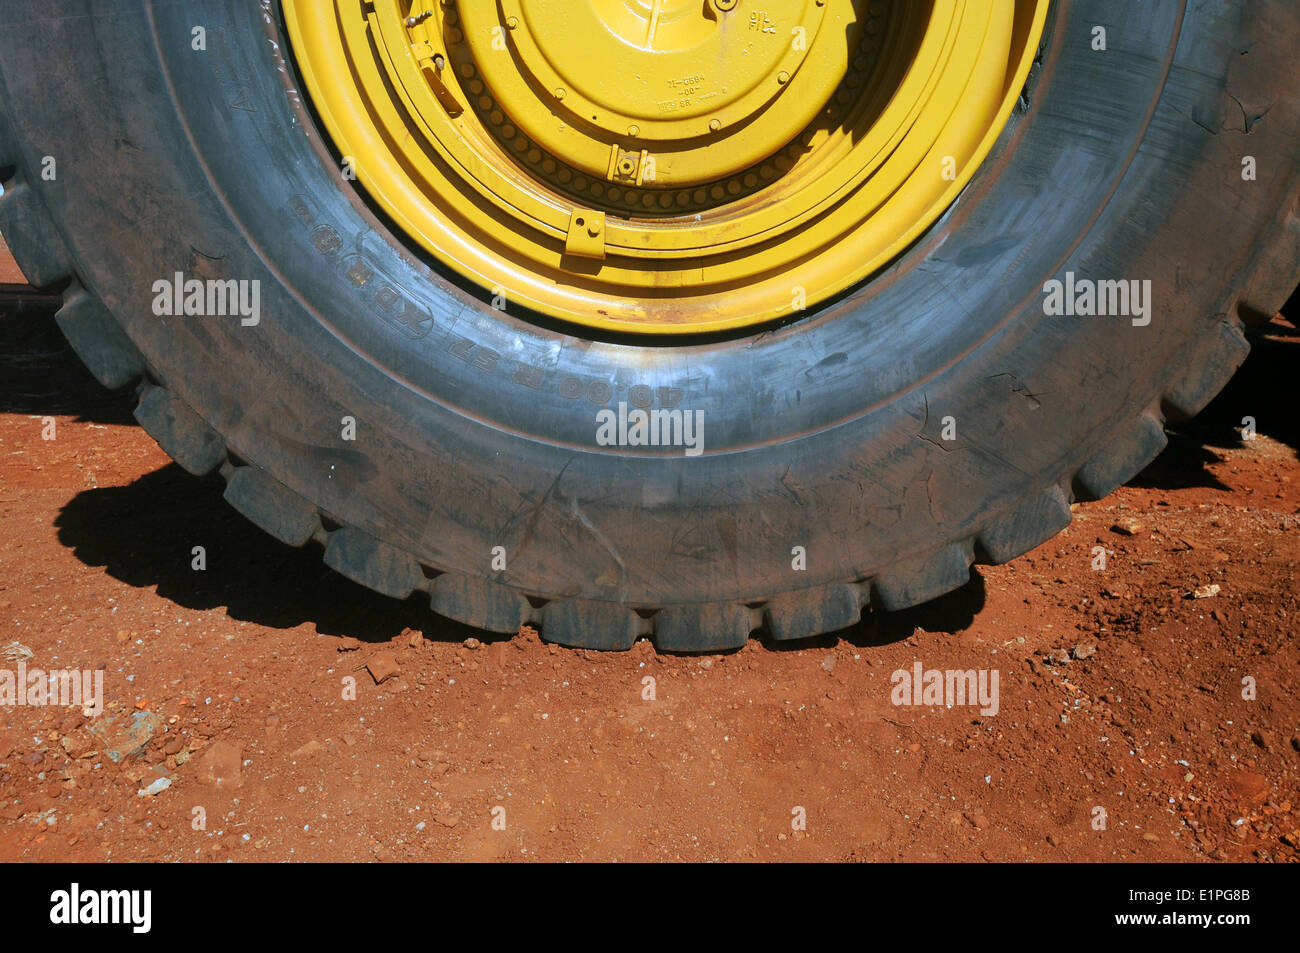 Wheel and tyre of enormous haulpak mining truck on red iron ore-containing earth, Pilbara region, Western Australia. No PR Stock Photo